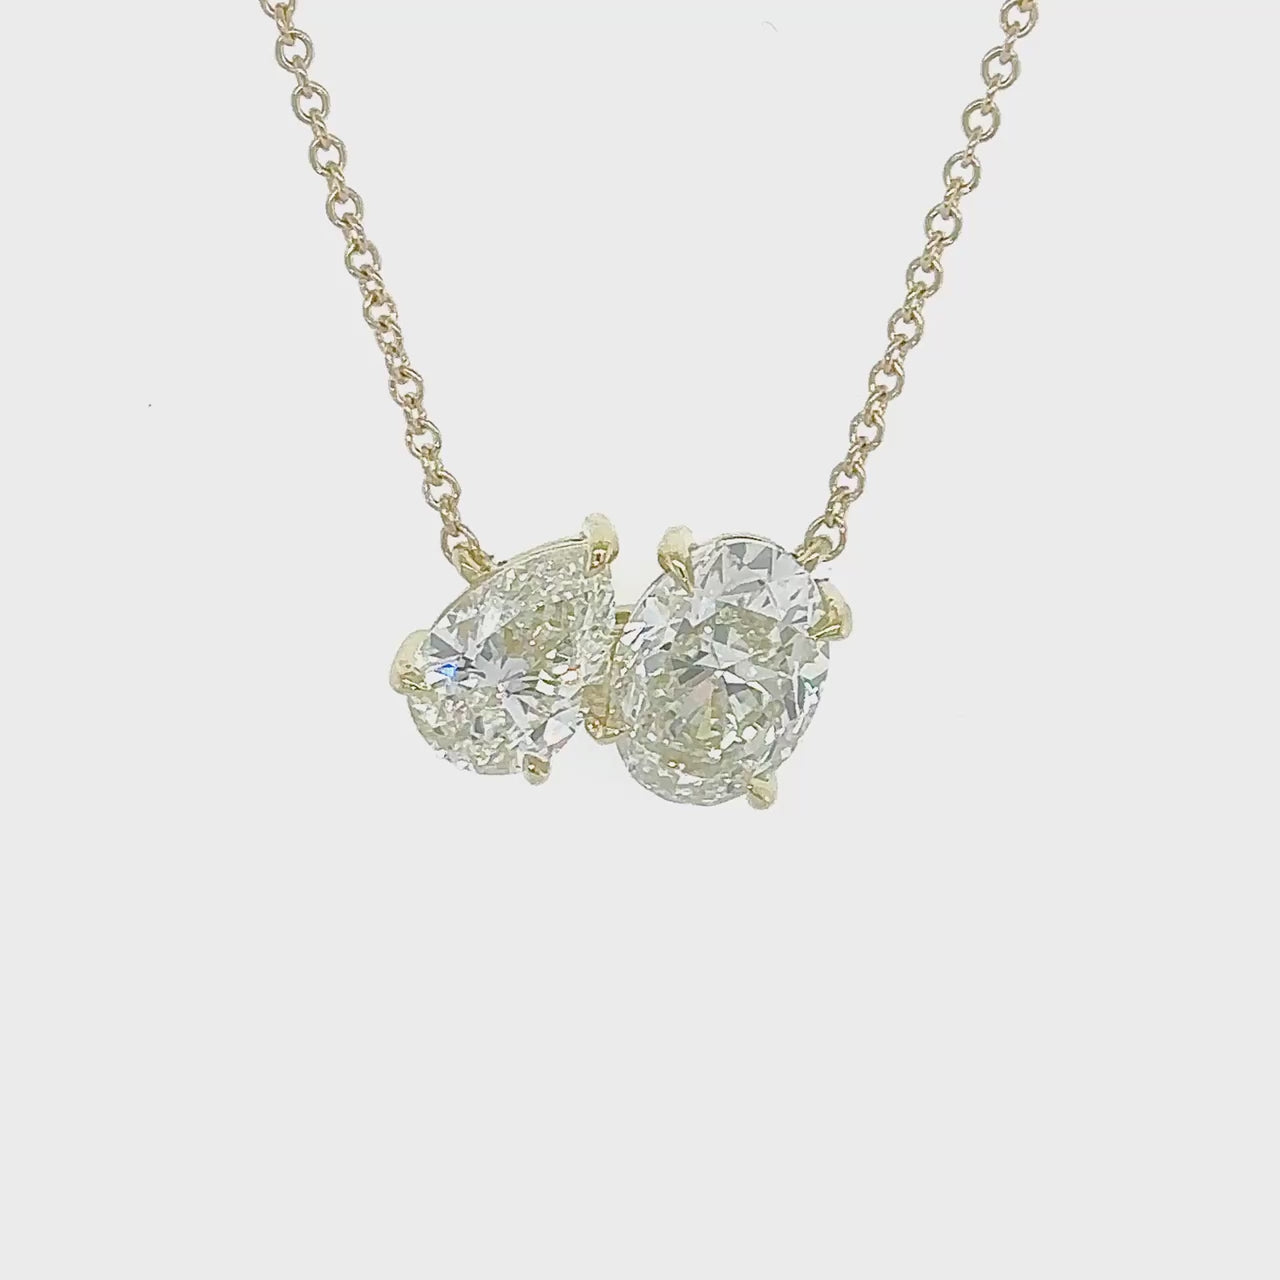 Oval-shaped diamond pendant, pear-shaped diamond pendant, elegant jewelry, sparkling pendant, diamond necklace, fine craftsmanship, exquisite design, luxury accessory.